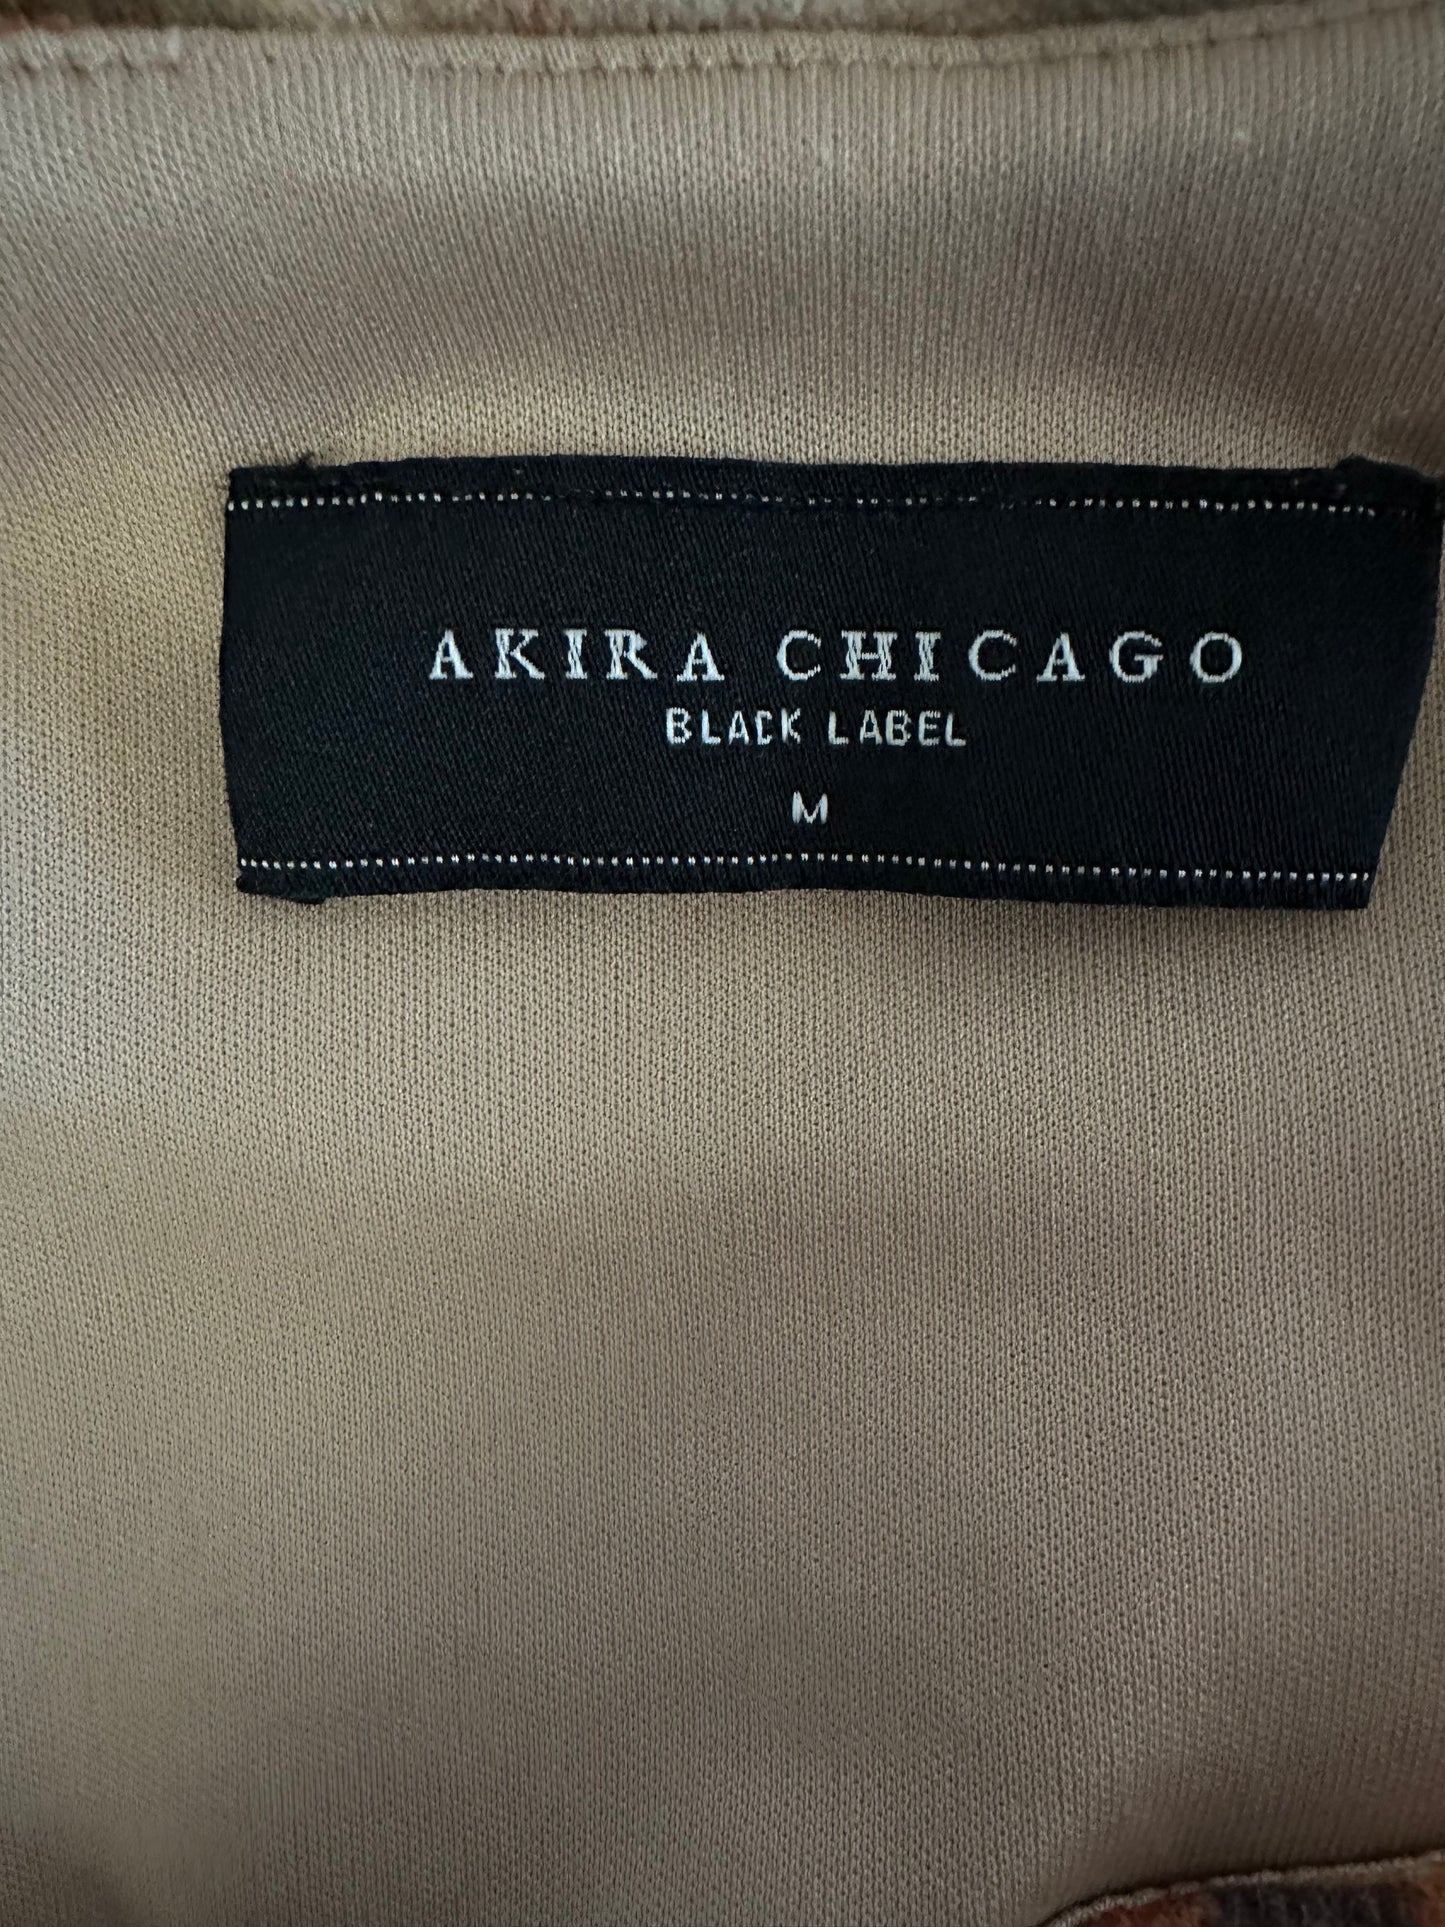 Akira Chicago Black Label - Tan Floral Dress